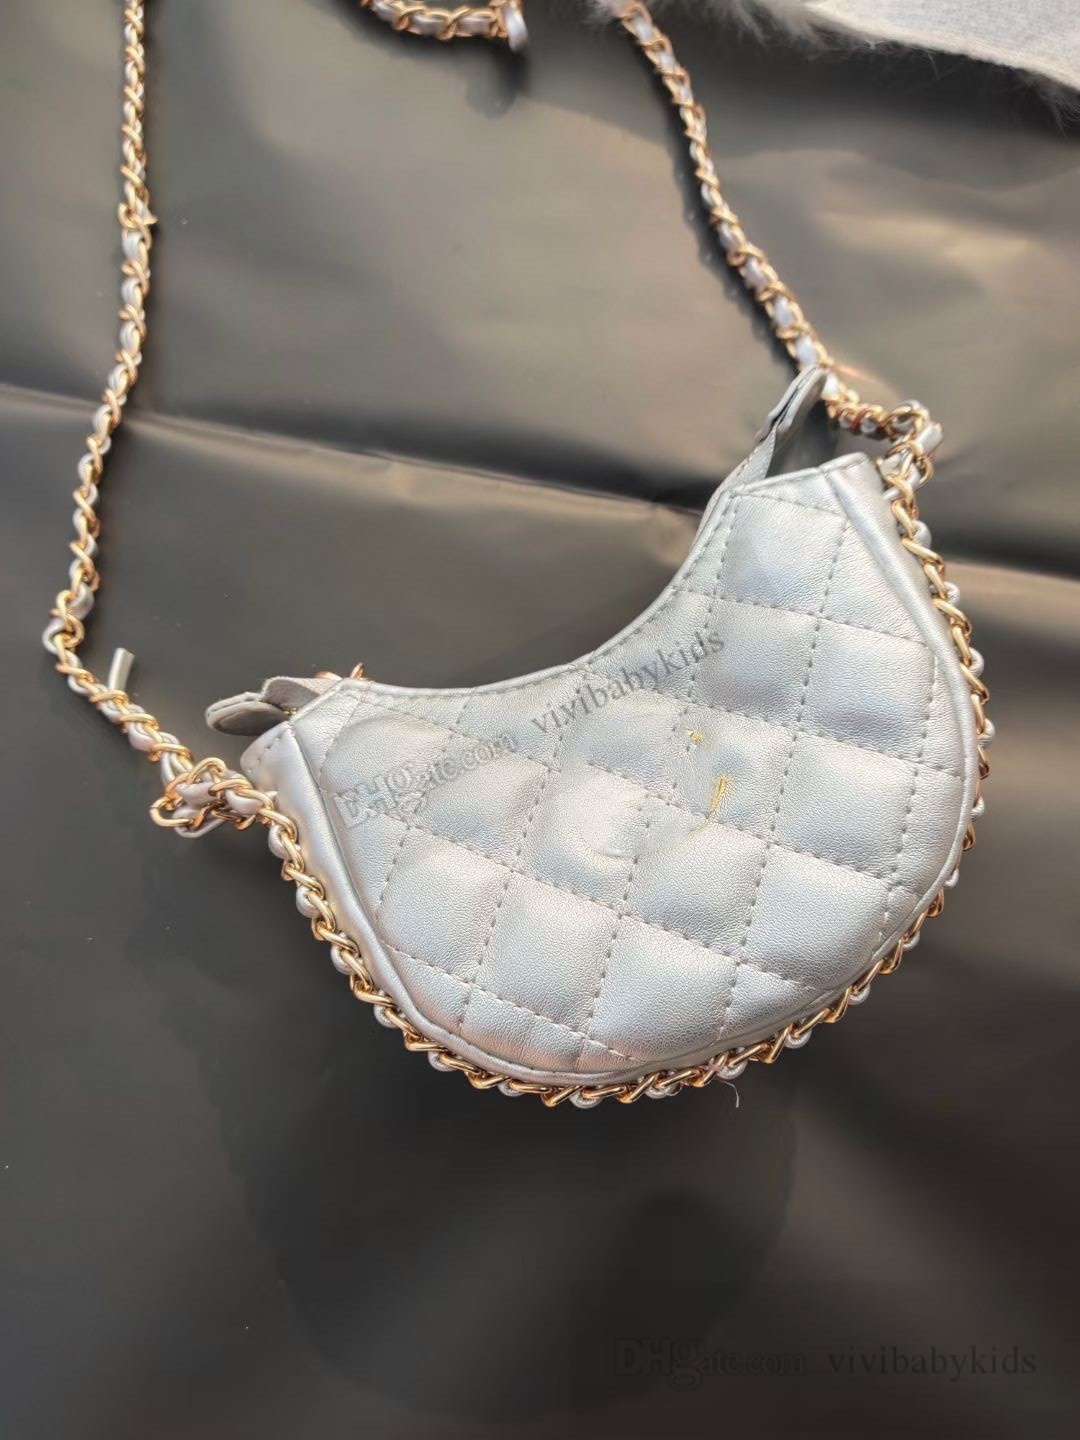 Fashion children diamond checkered handbags INS girls metal letter chain one shoulder bags kids PU leather crossbody bag S1032